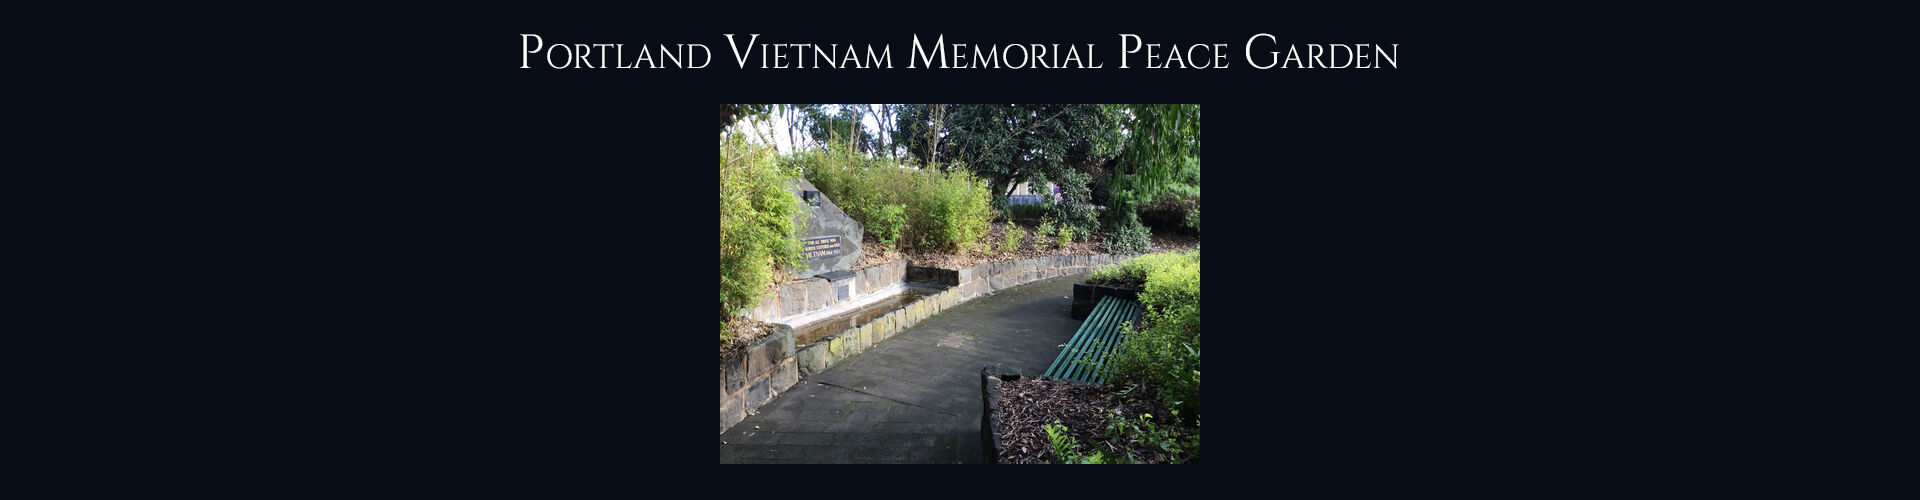 Portland Vietnam Memorial Peace Garden